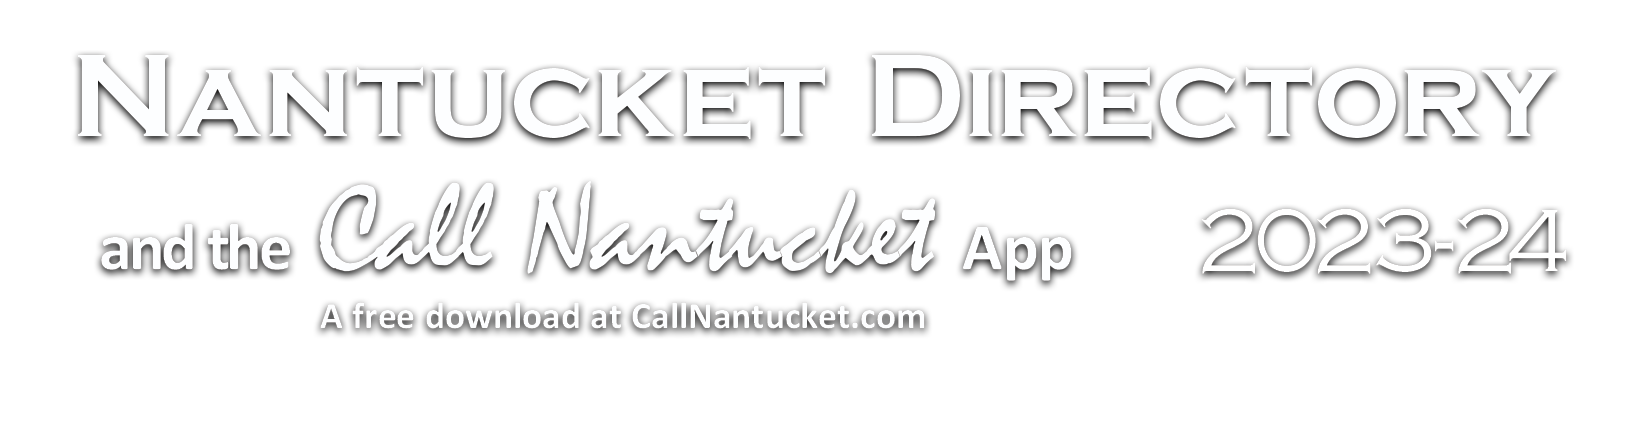 Nantucket Directory and the Call Nantucket App